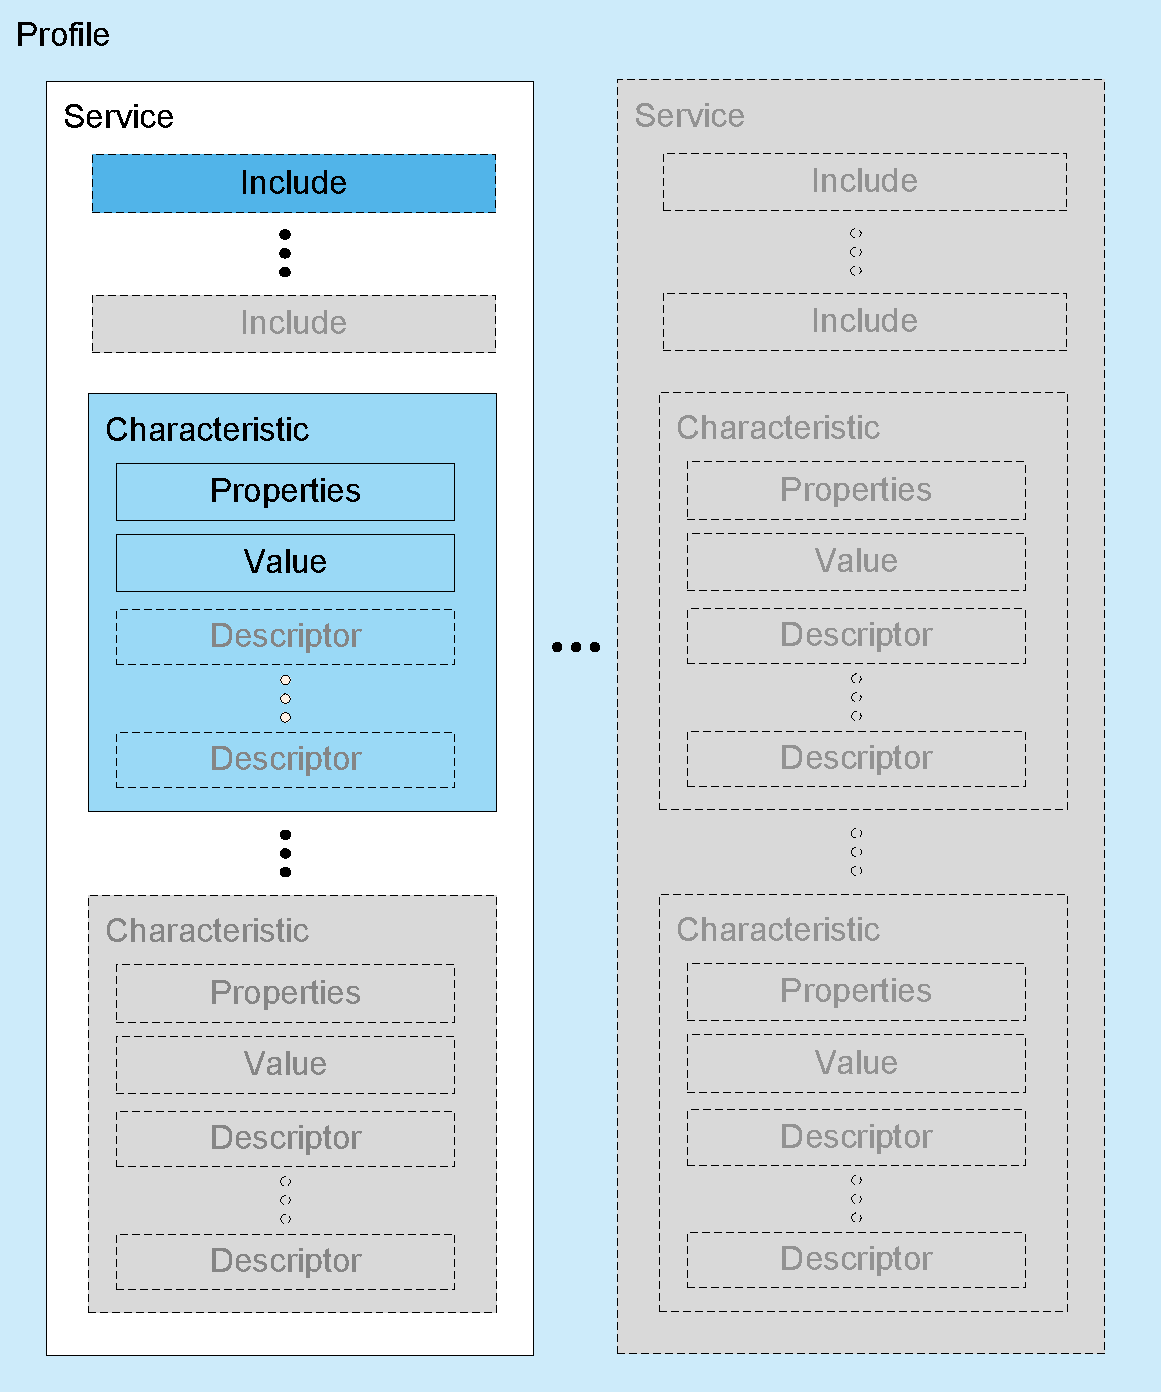 GATT-Based Profile hierarchy